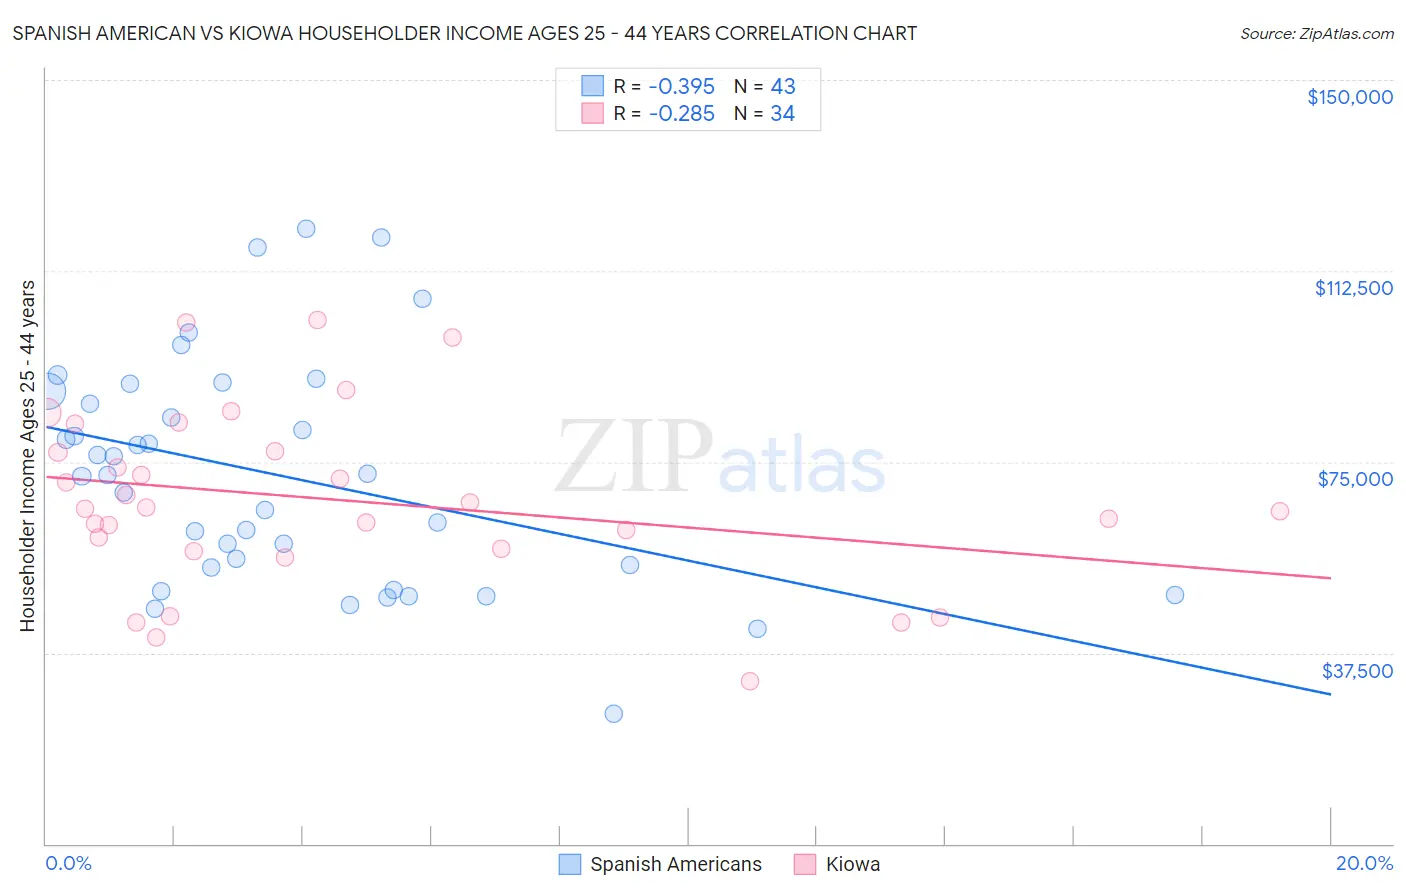 Spanish American vs Kiowa Householder Income Ages 25 - 44 years